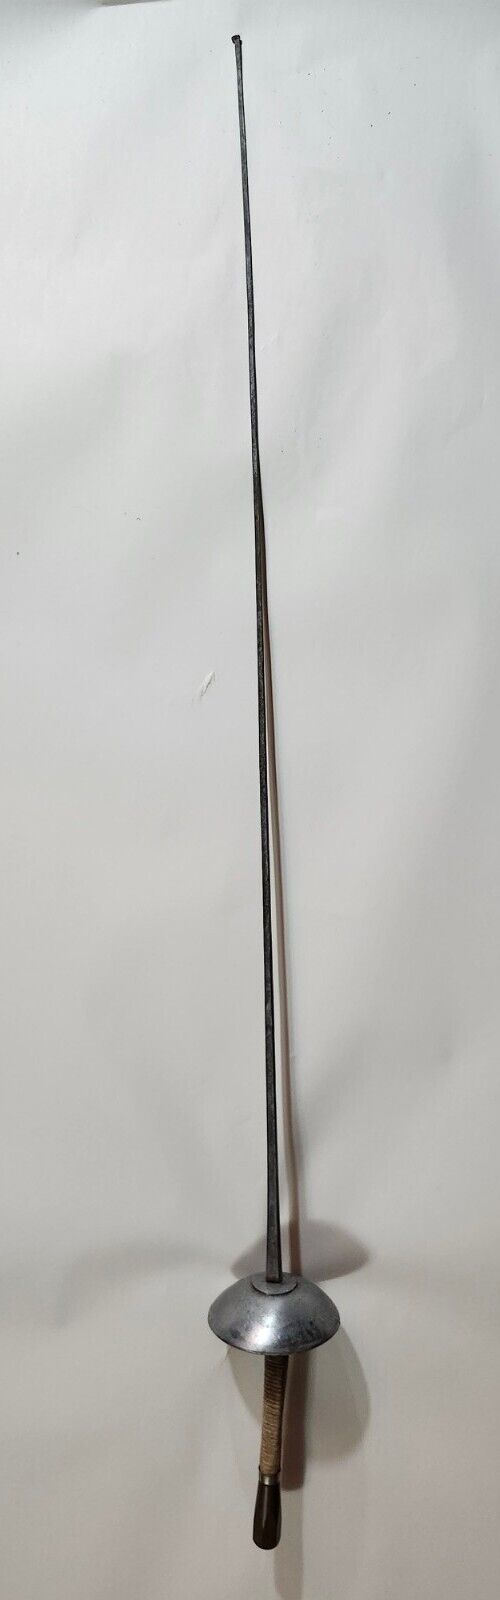 Vintage Fencing Sword metal Handle Castello 111 Dull Blade Fencing France 43